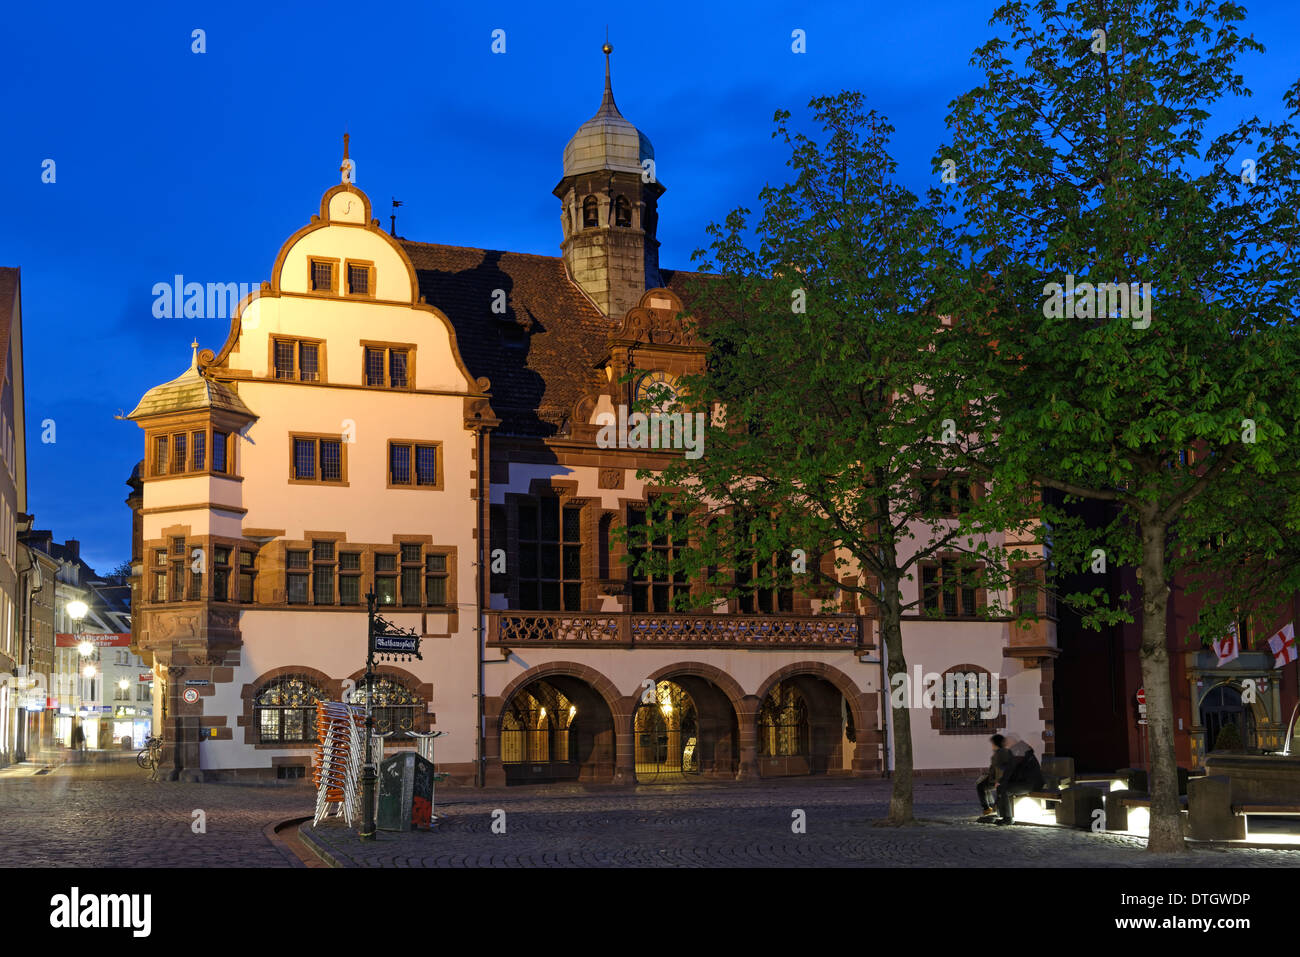 Town Hall, Rathausplatz square, Freiburg im Breisgau, Baden-Württemberg, Germany Stock Photo